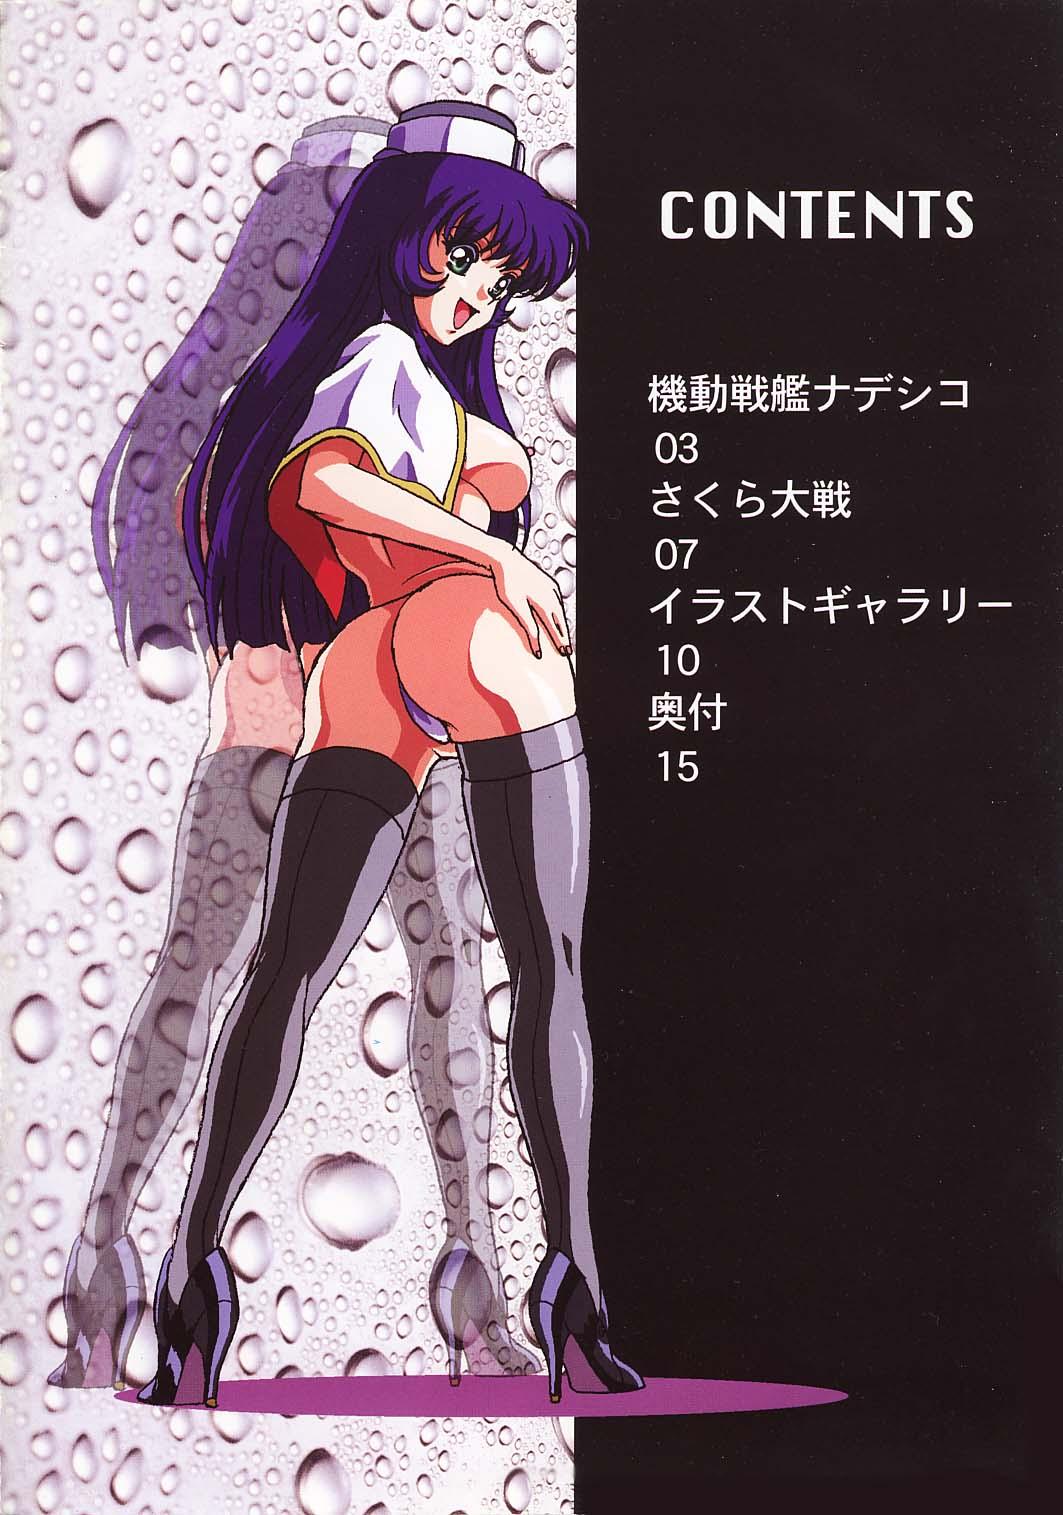 Lesbian Porn Mon-Mon Land EX - Sakura taisen Martian successor nadesico El hazard Shamanic princess Free 18 Year Old Porn - Page 2